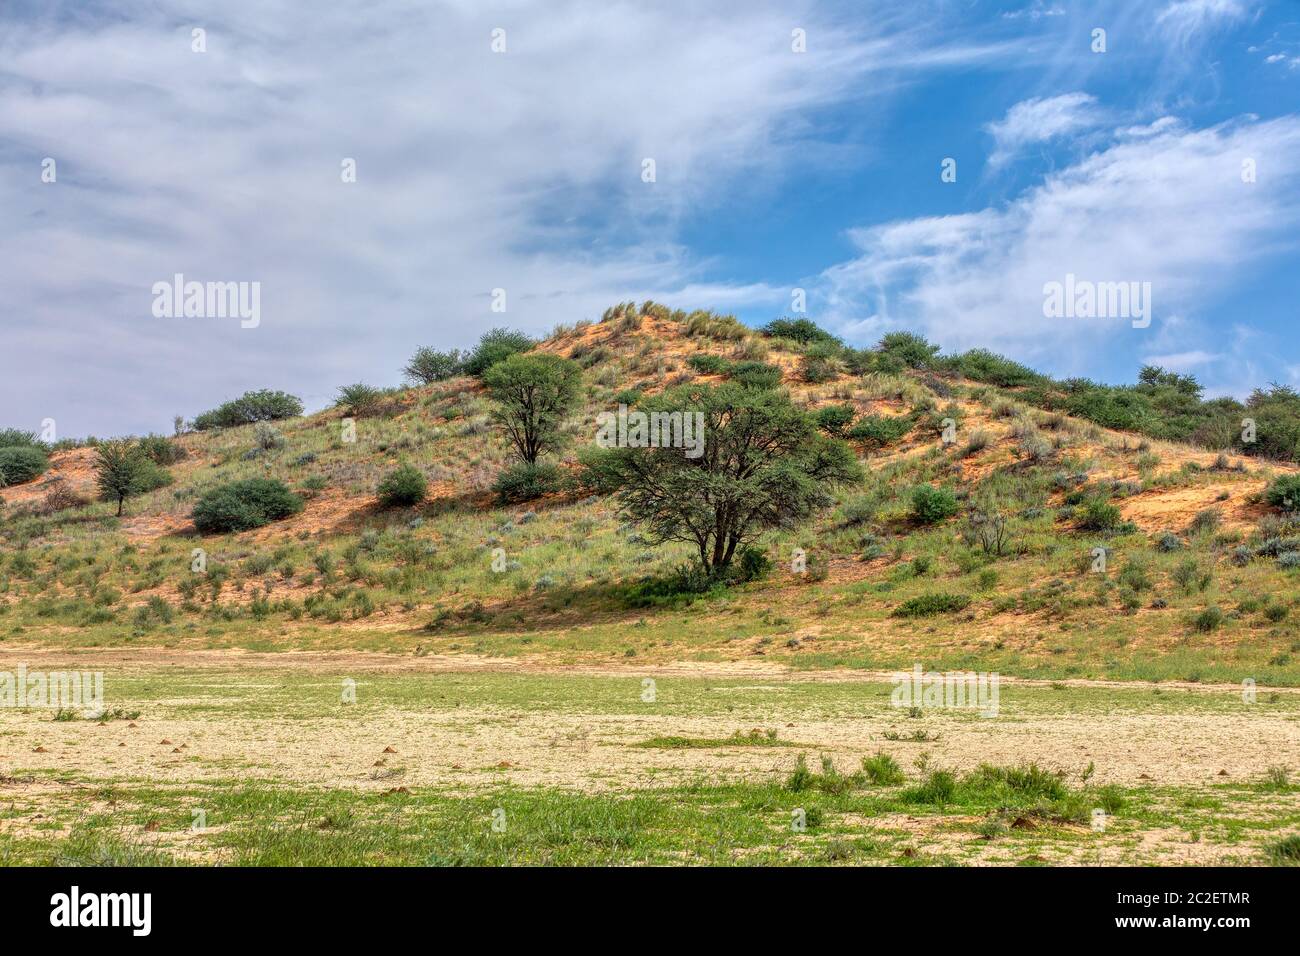 green Kalahari desert after rain season, South Africa wilderness Stock Photo